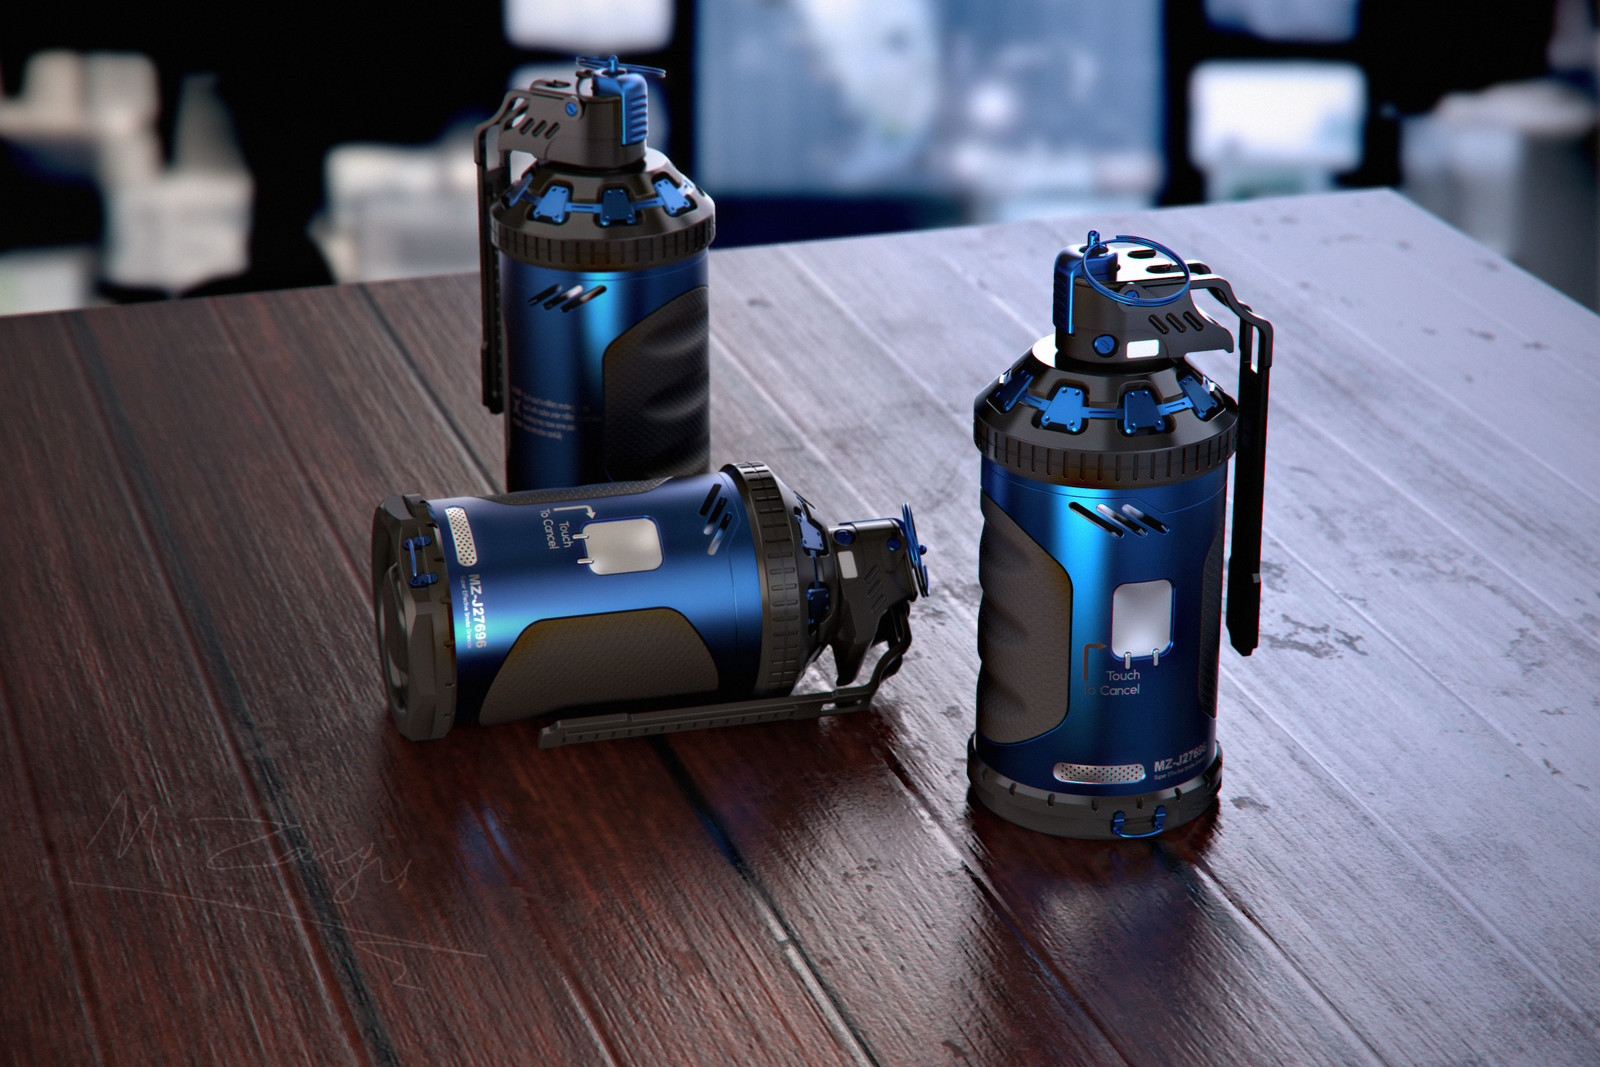 Sci-Fi smoke grenade design